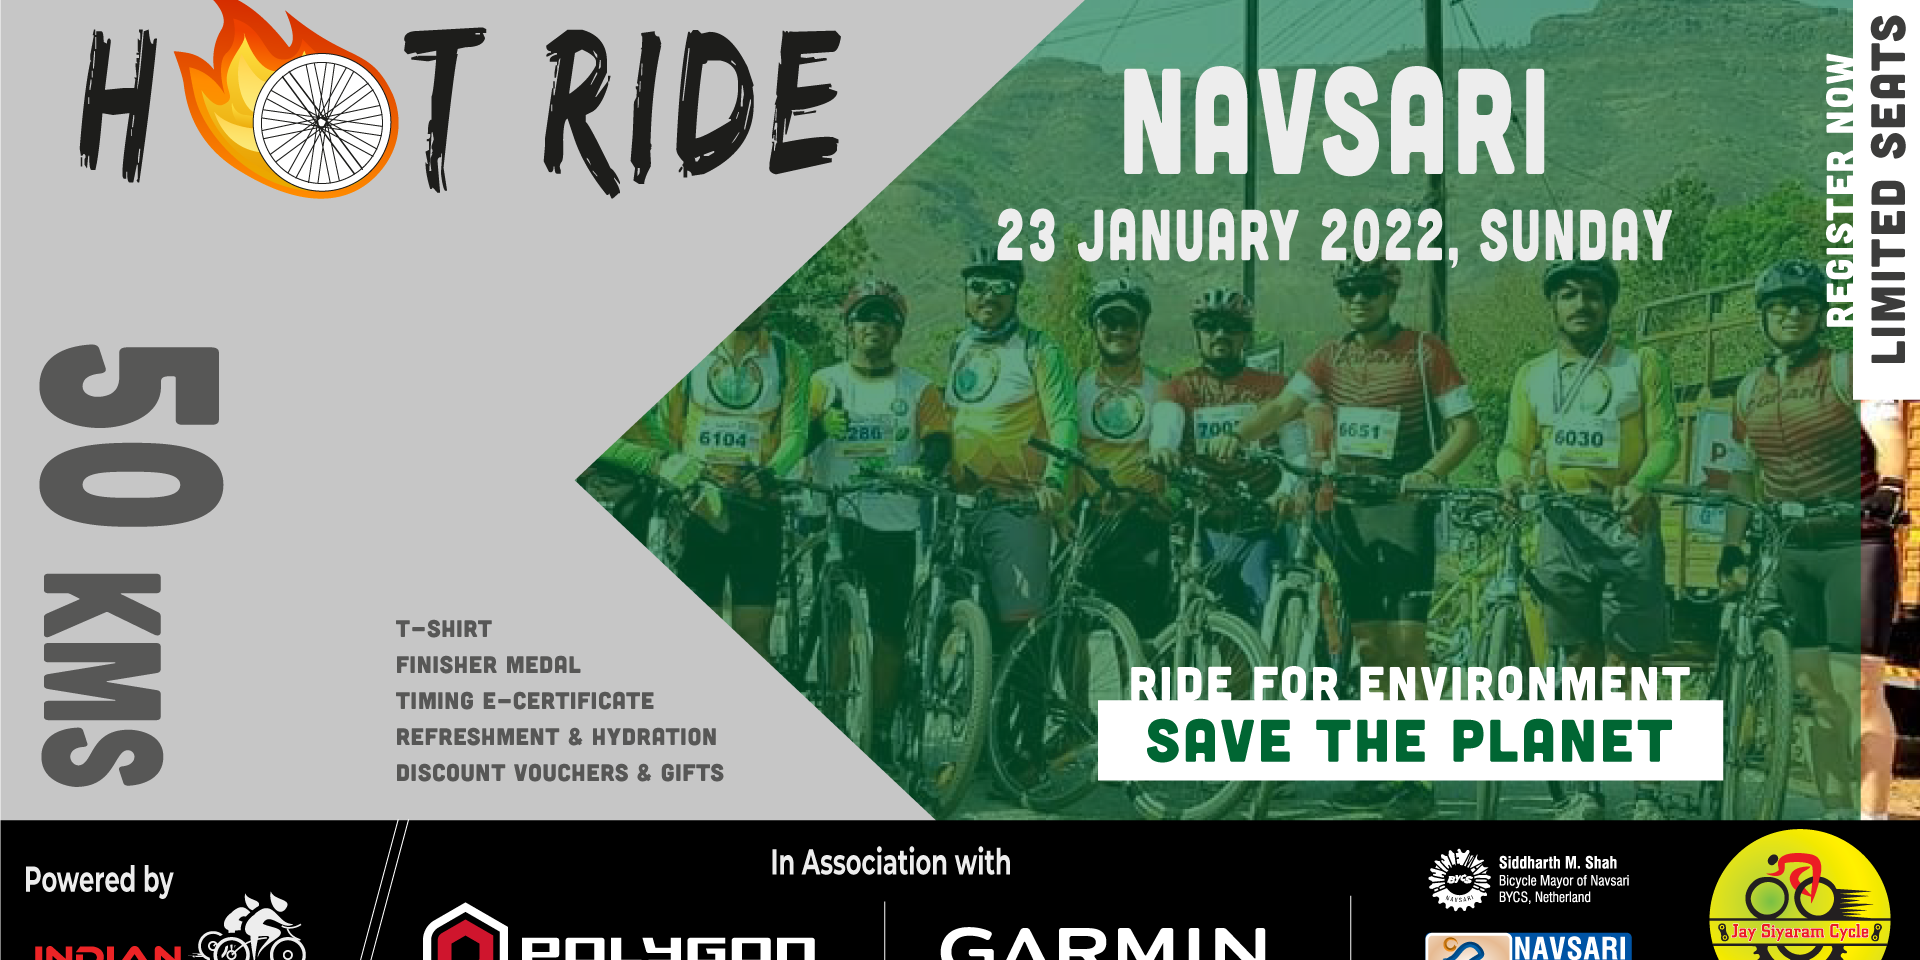 Hot Ride Navsari 2022 image